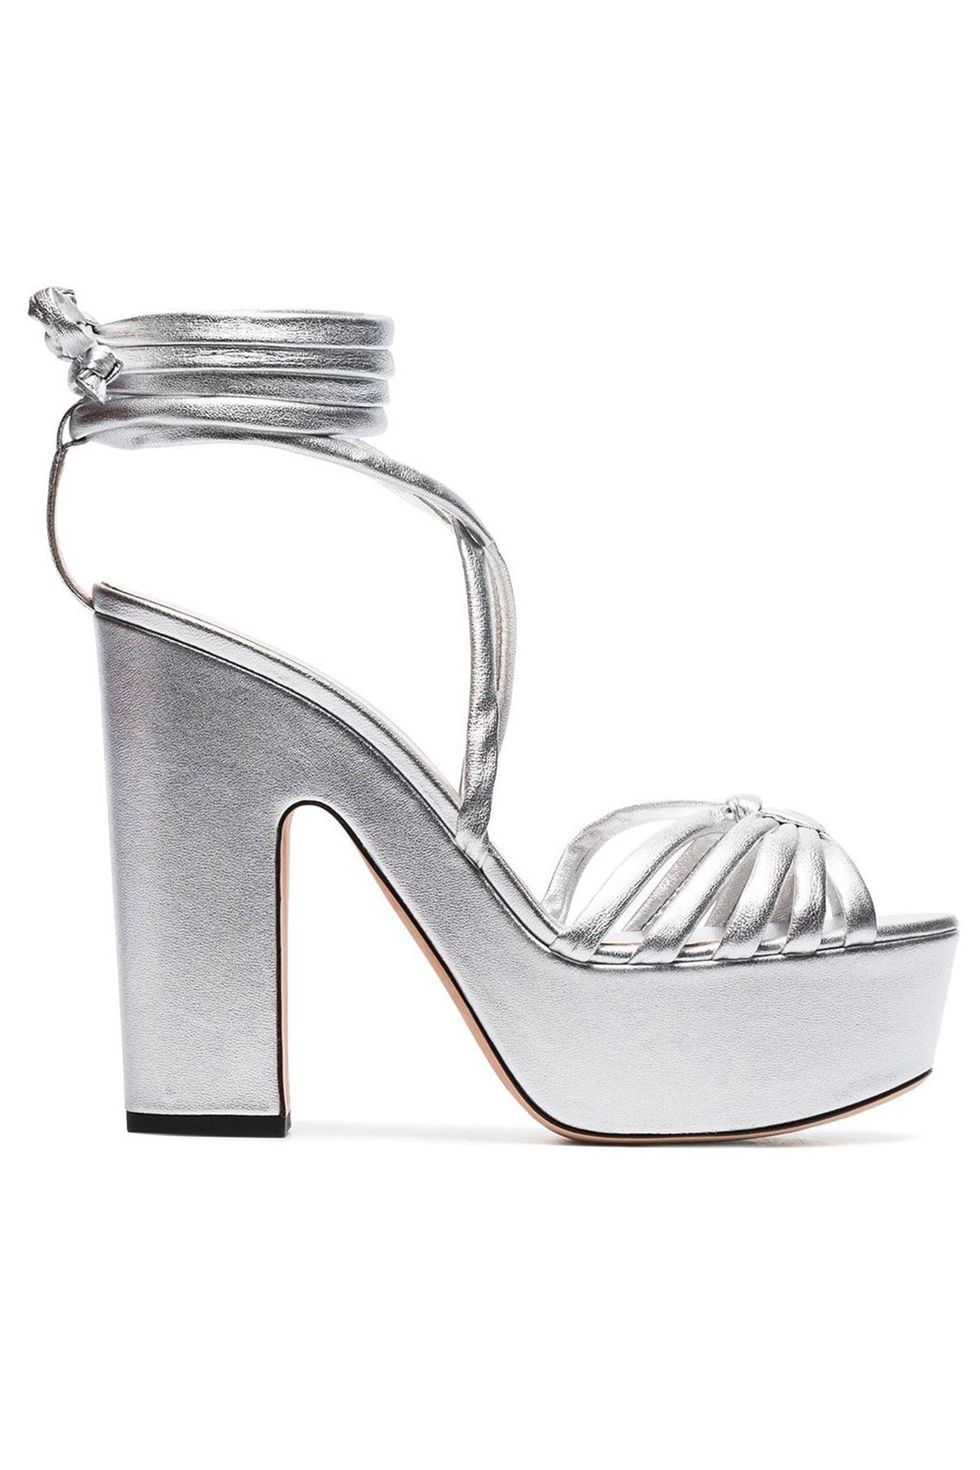 Metallic Silver Platform Sandals